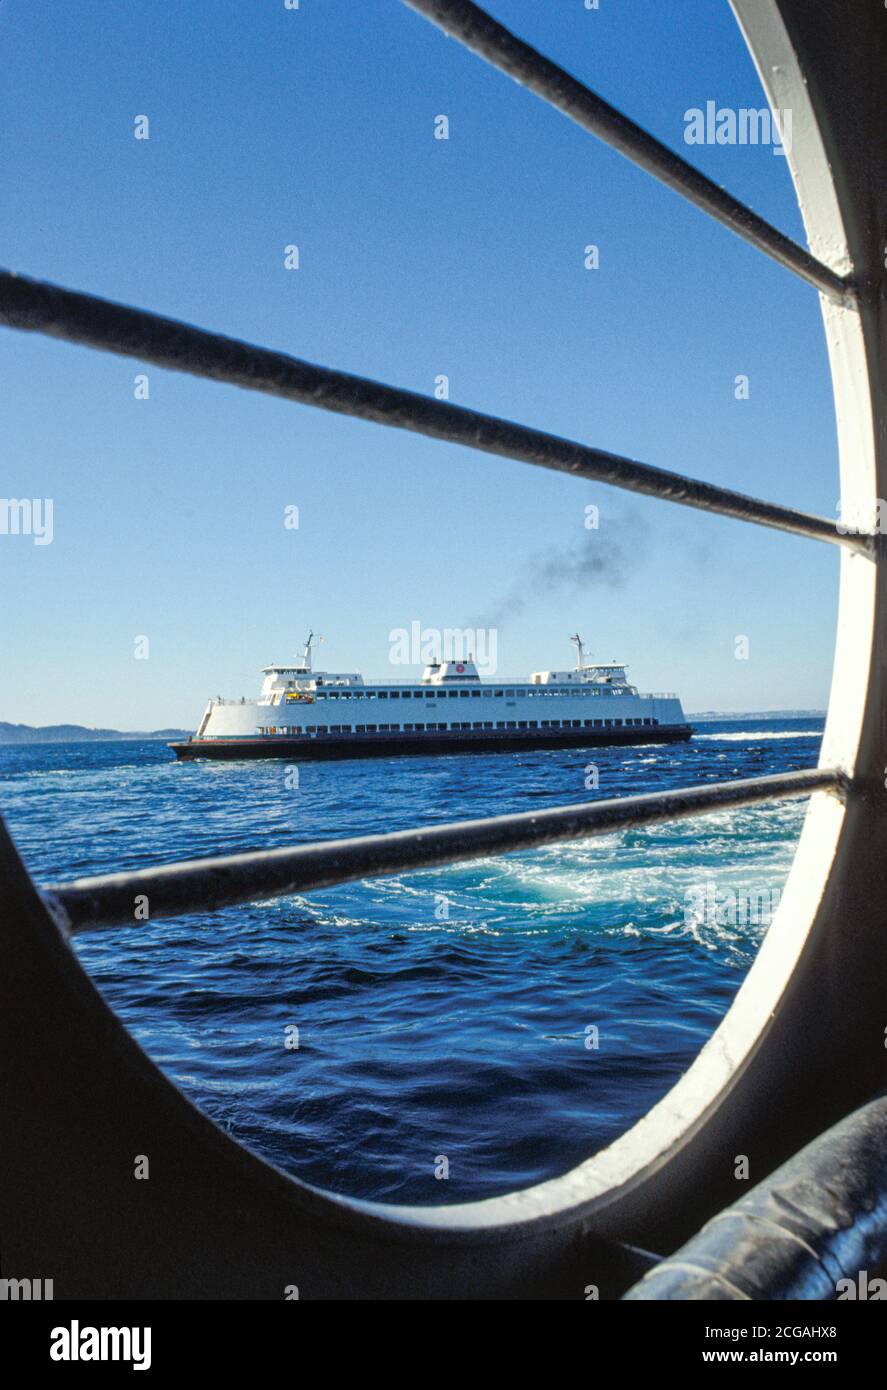 Washington State Ferry on Puget Sound viewed through porthole of another ferry boat, Seattle, Washington USA Stock Photo